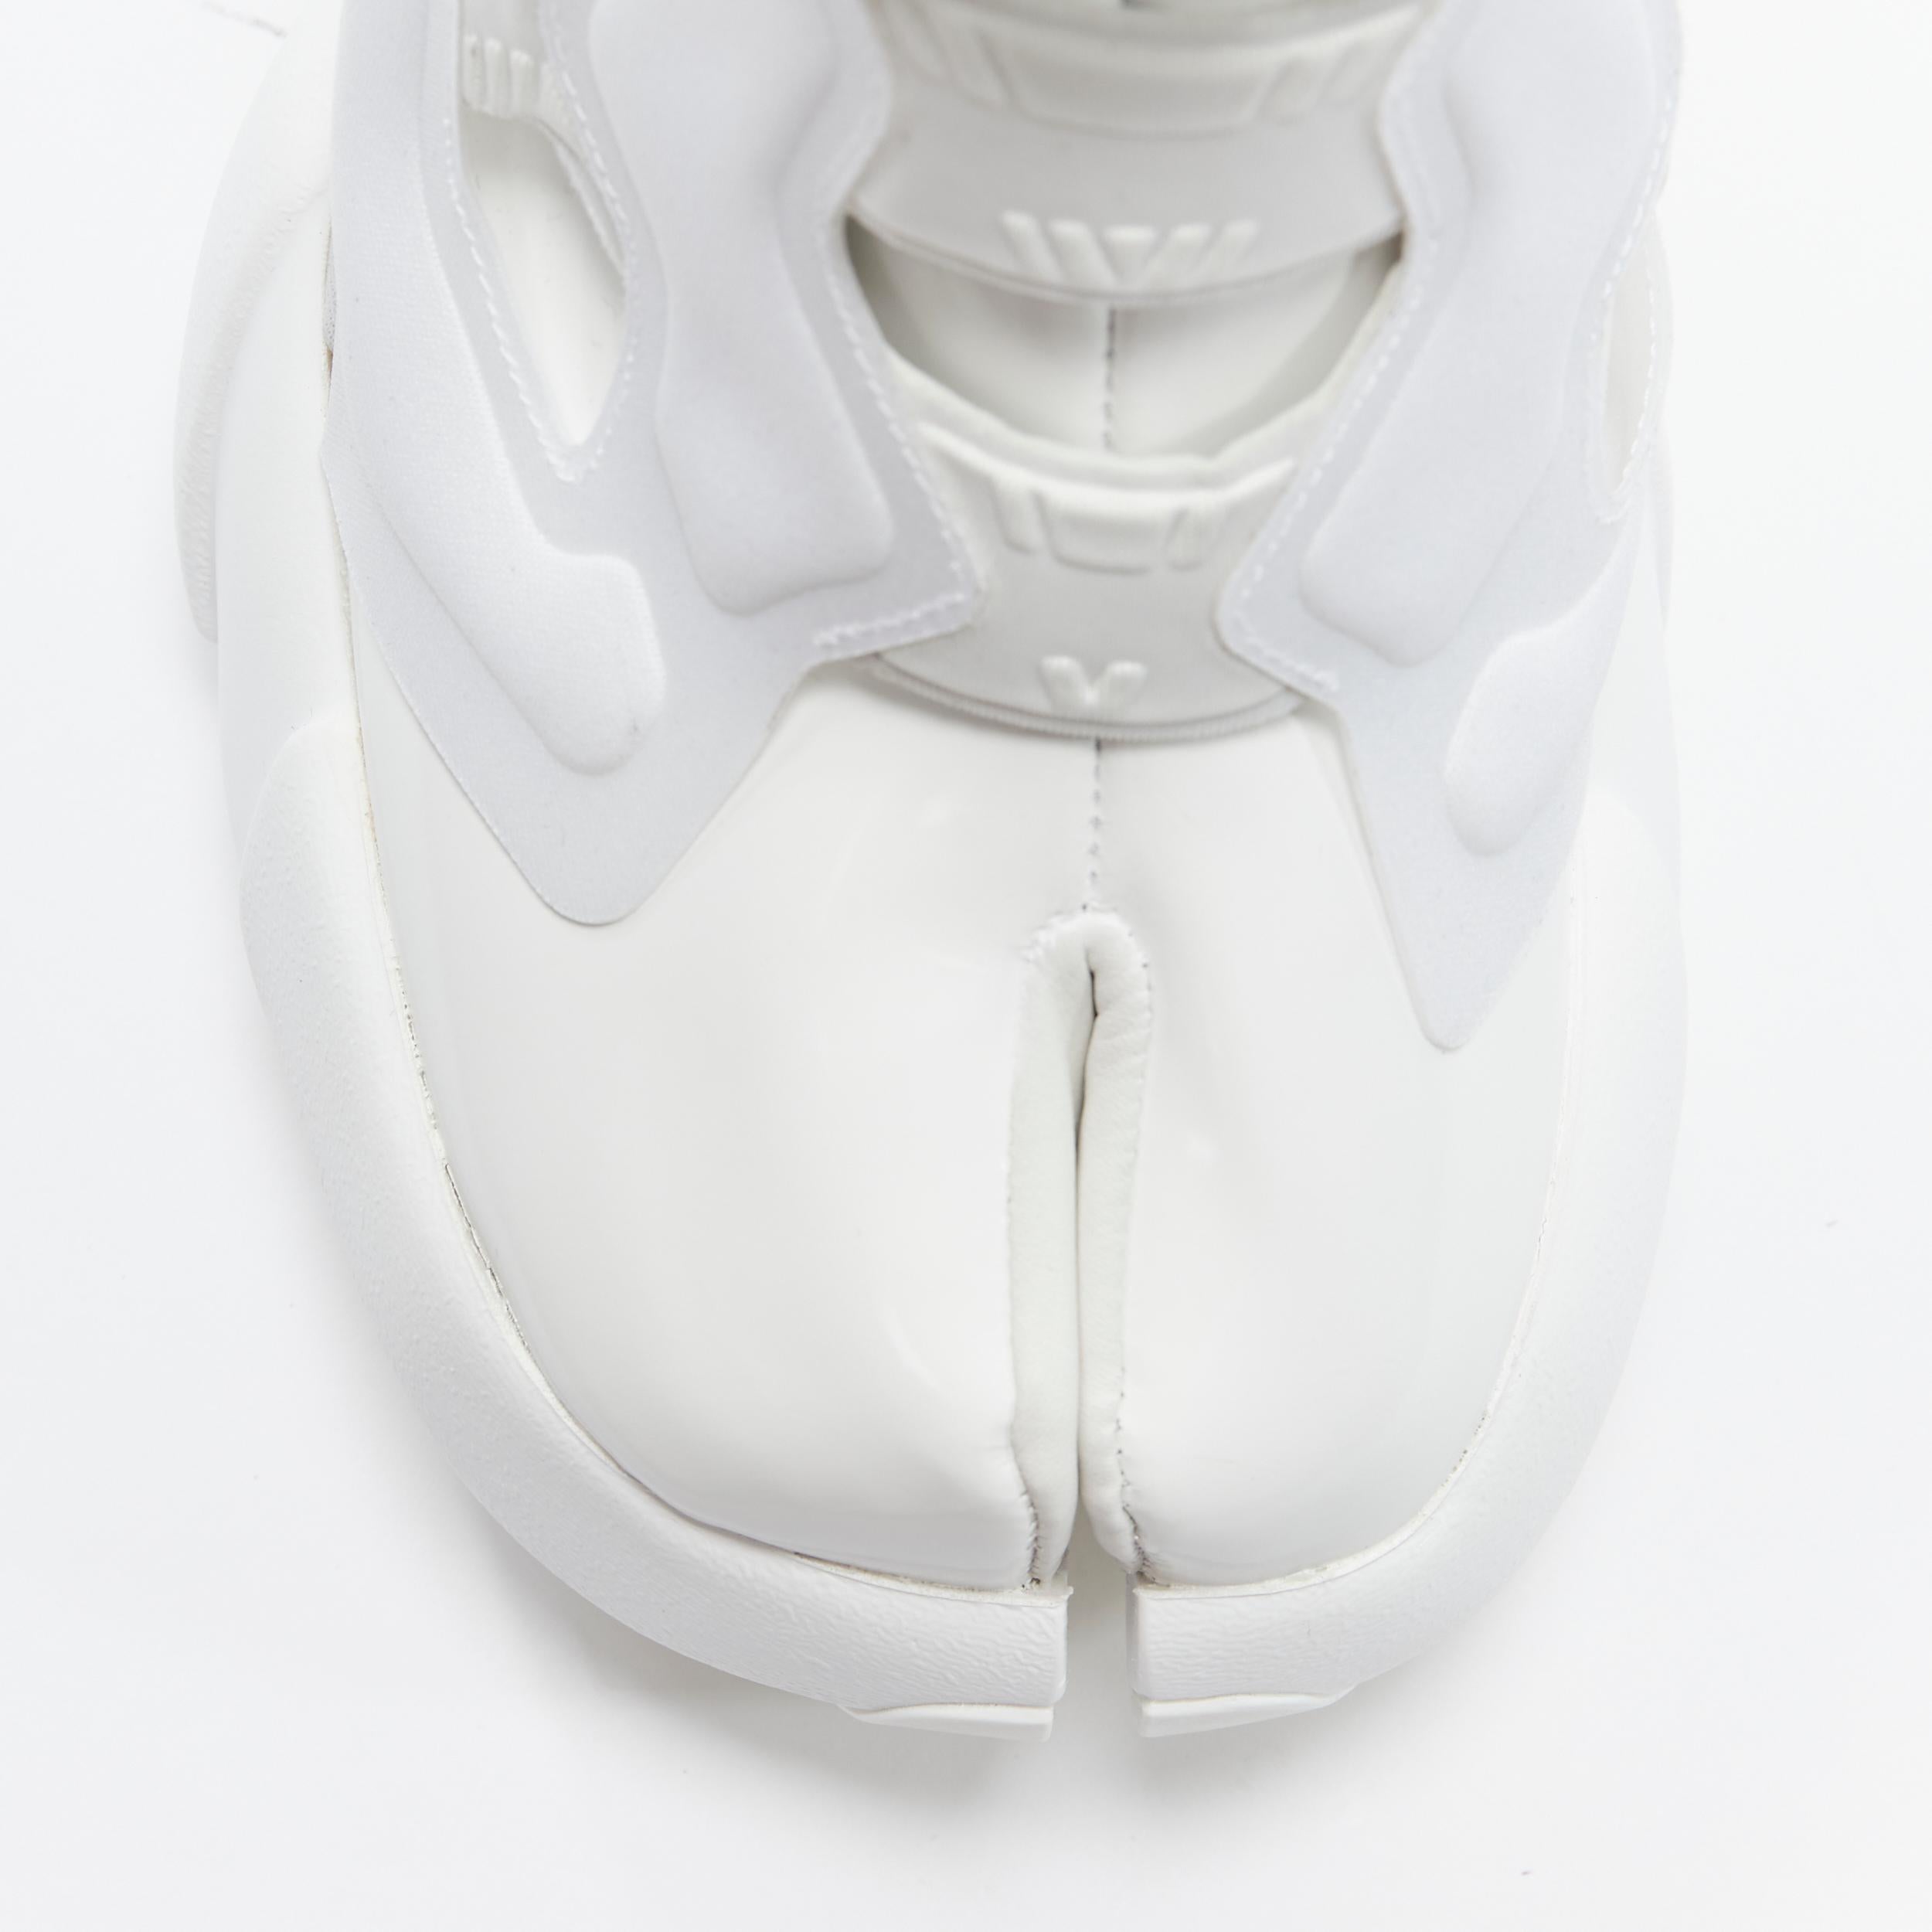 new MAISON MARGIELA REEBOK 2020 Runway Tabi Instapump white sneaker boot EU36 1